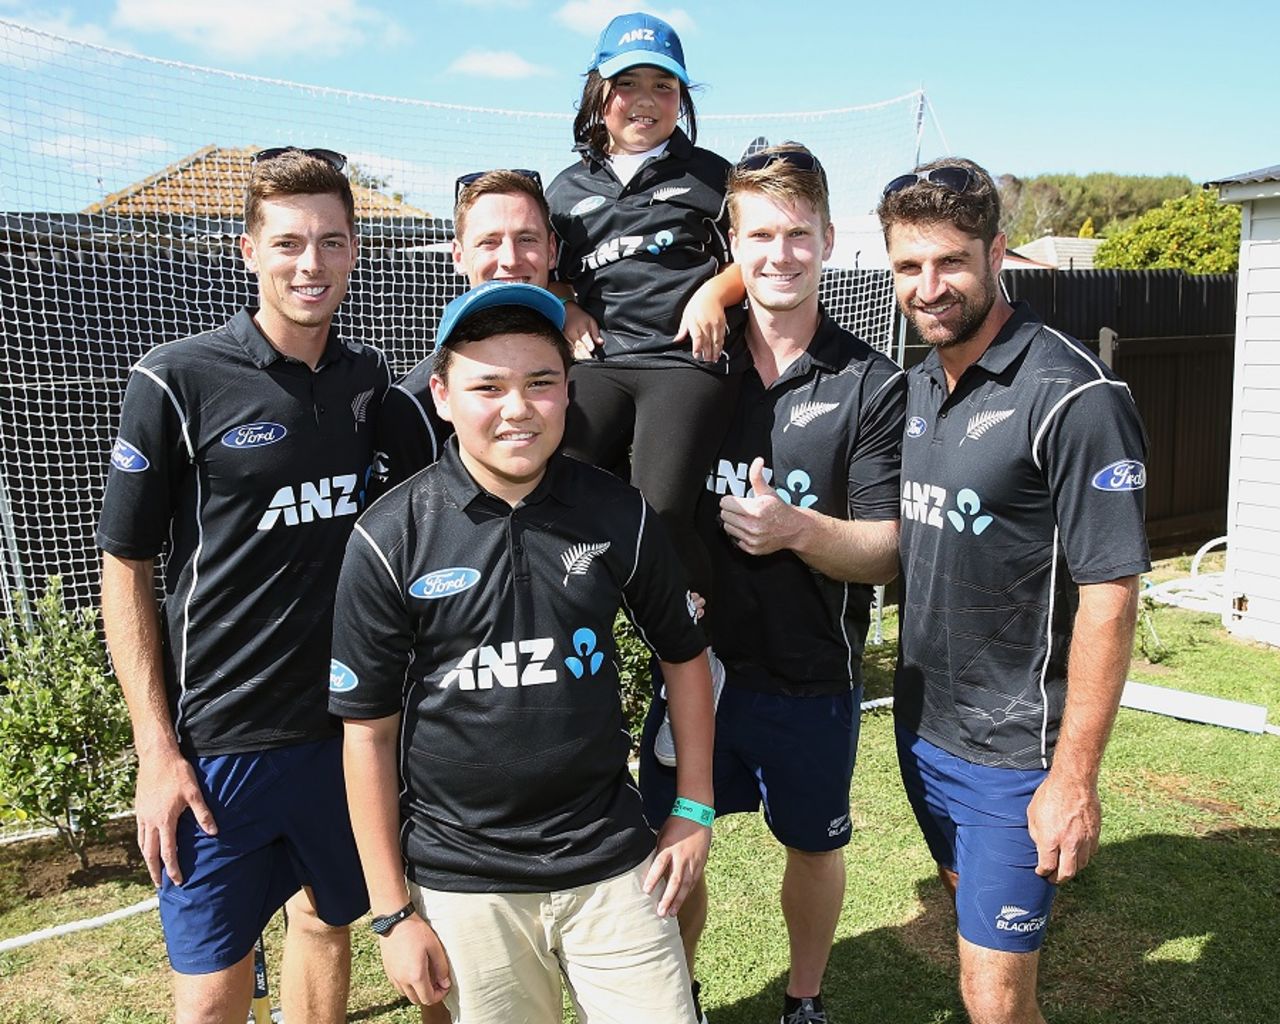 Mitchell Santner, Matt Henry, James Neesham, Colin de Grandhomme pose with kids at an ANZ event, Auckland, January 27, 2017